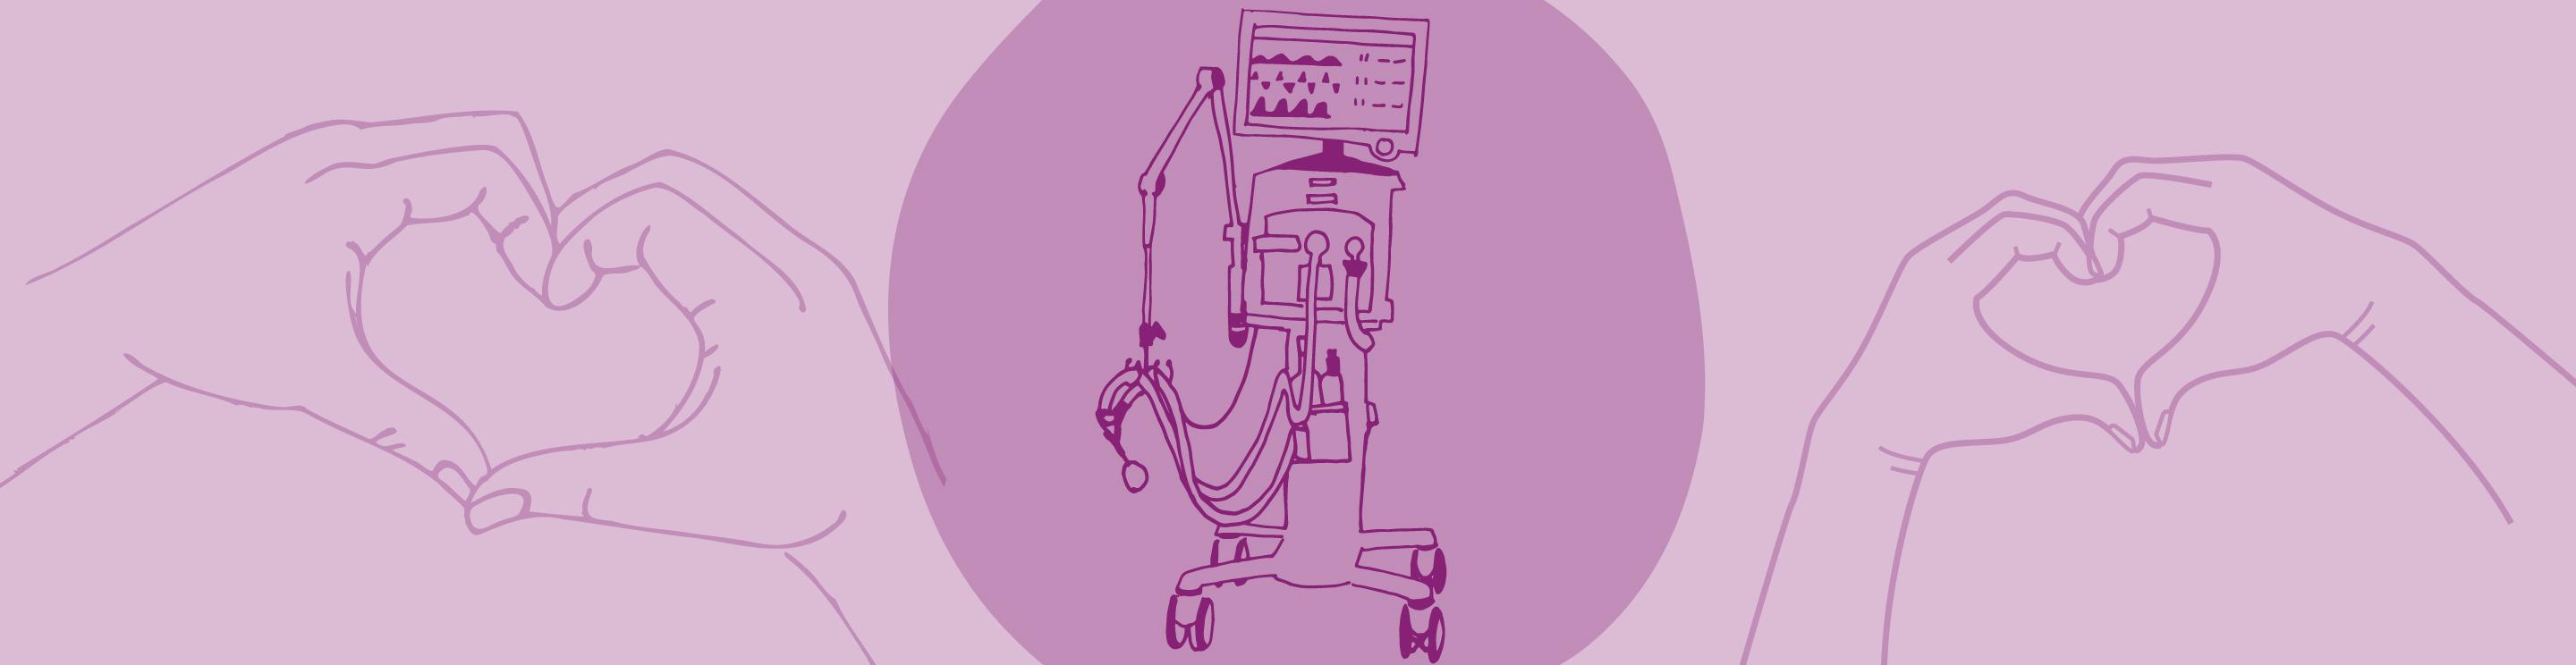 Cartoon drawing of a ventilator